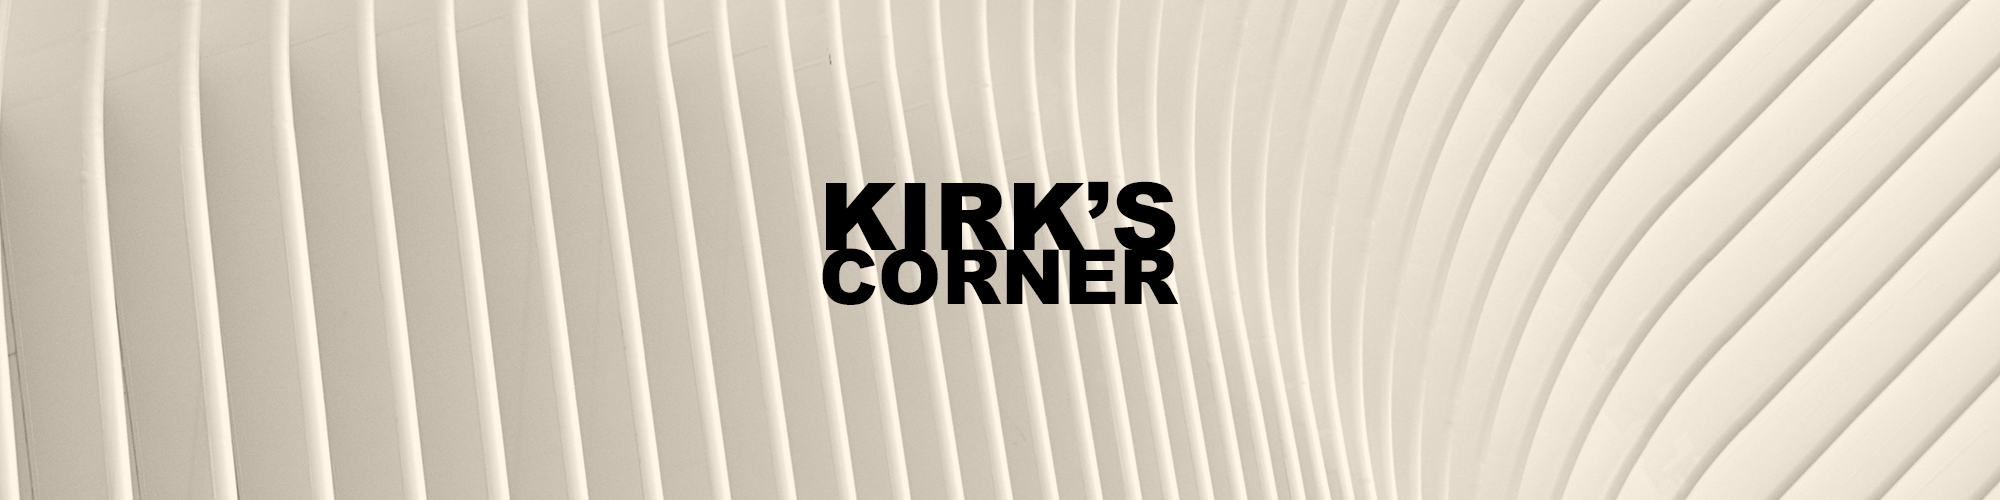 Kirk’s Corner 006: ‘Burning For You’ Album Review